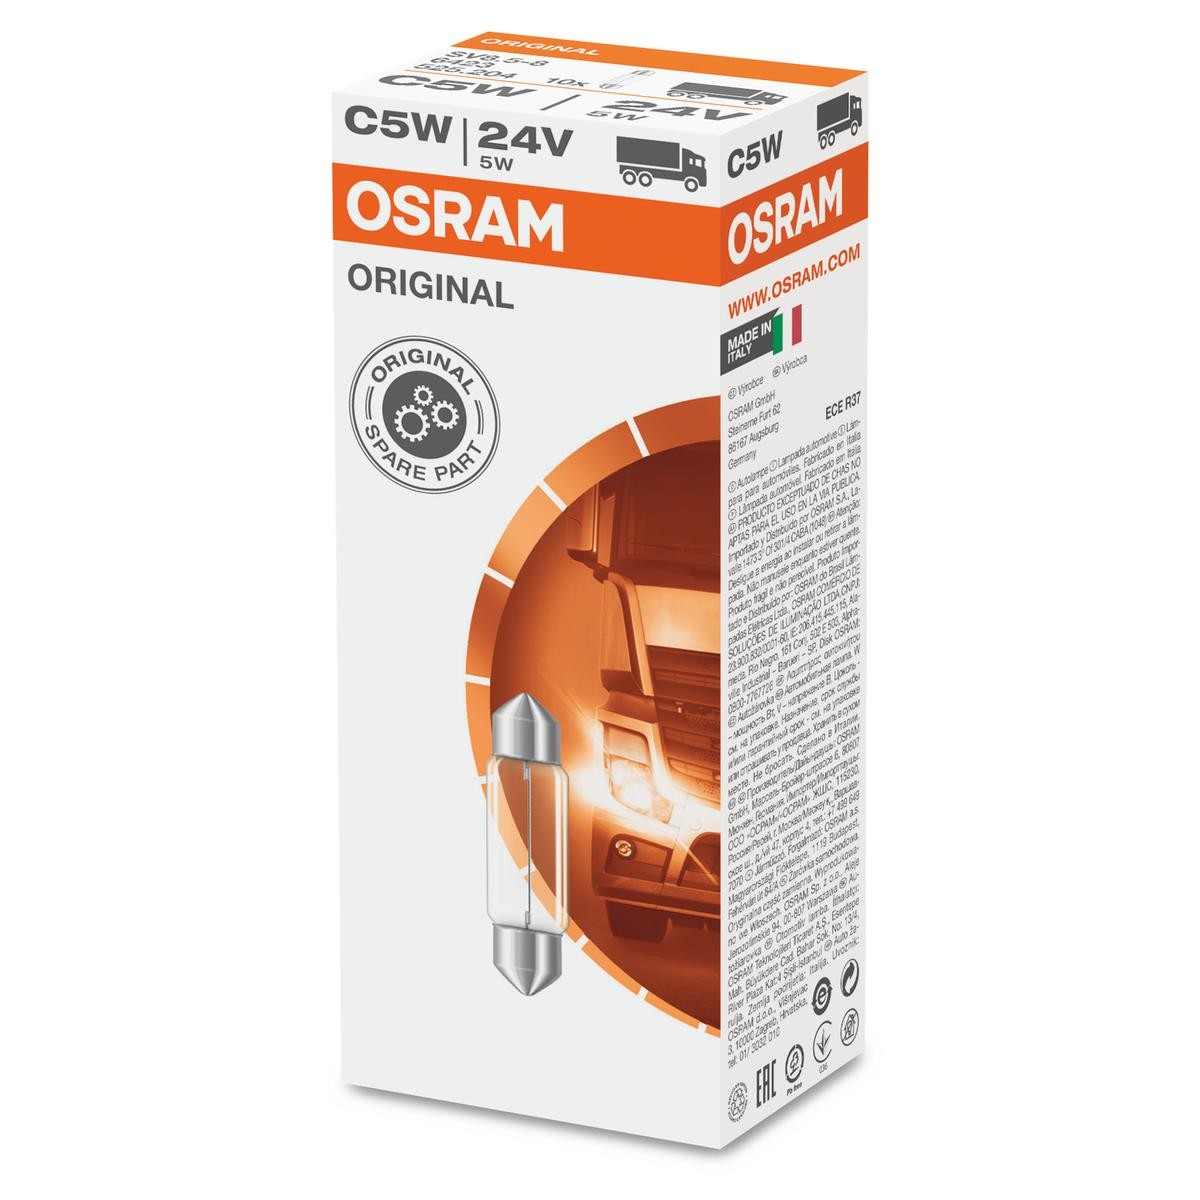 6423 OSRAM Number plate light bulb FIAT 24V 5W, C5W, SV8.5-8